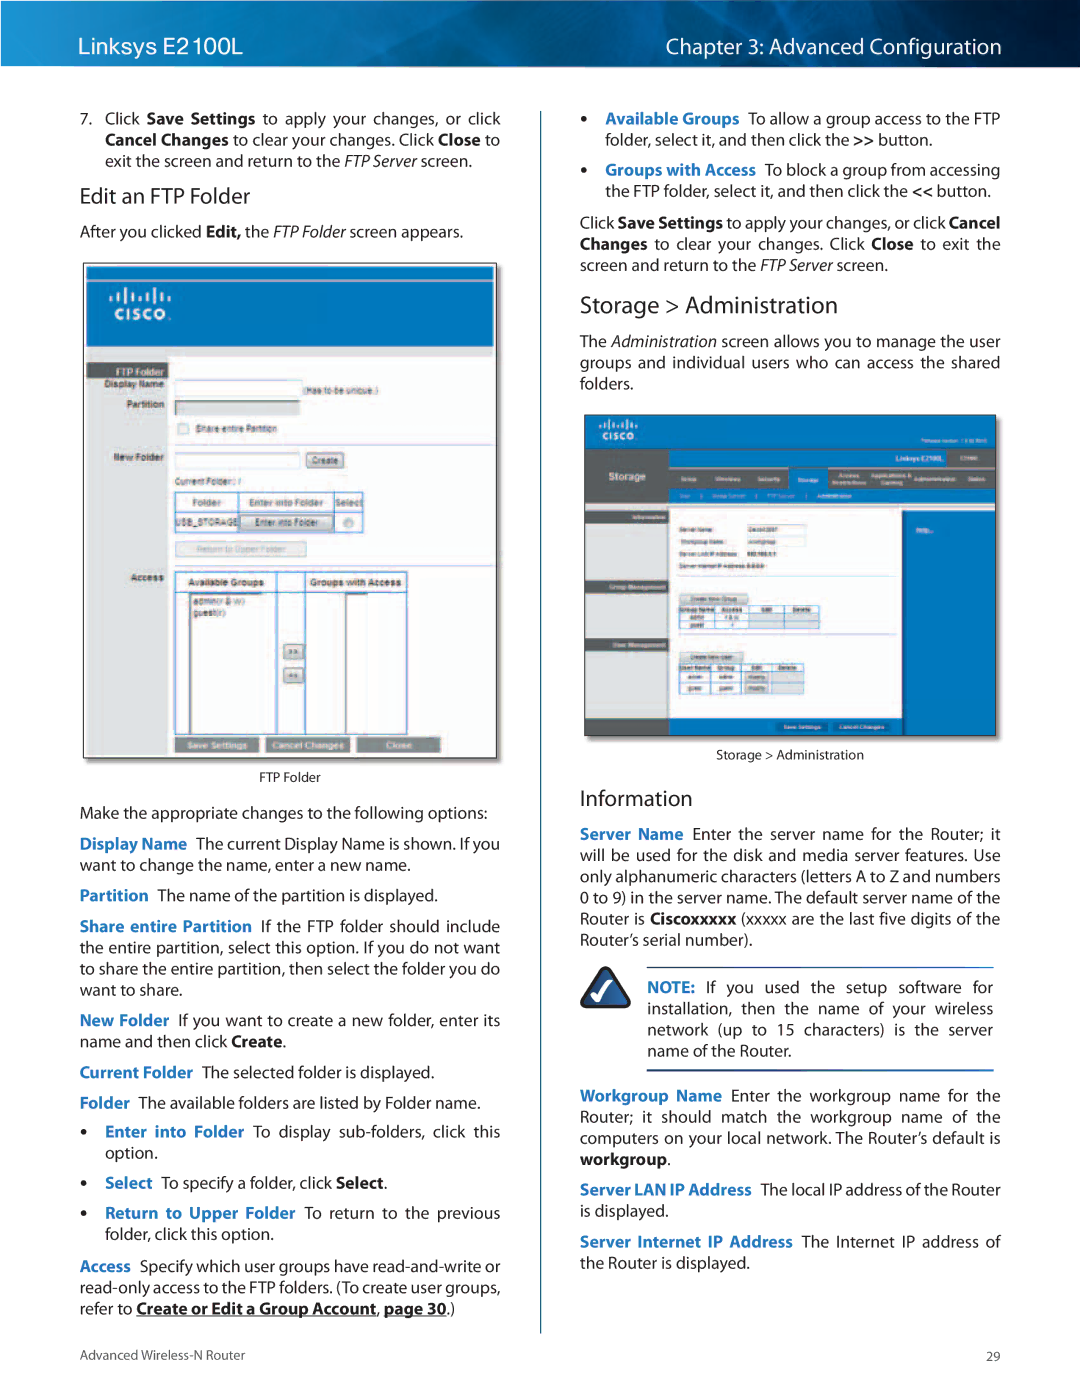 Linksys E2100L manual Storage Administration, Edit an FTP Folder, Information 